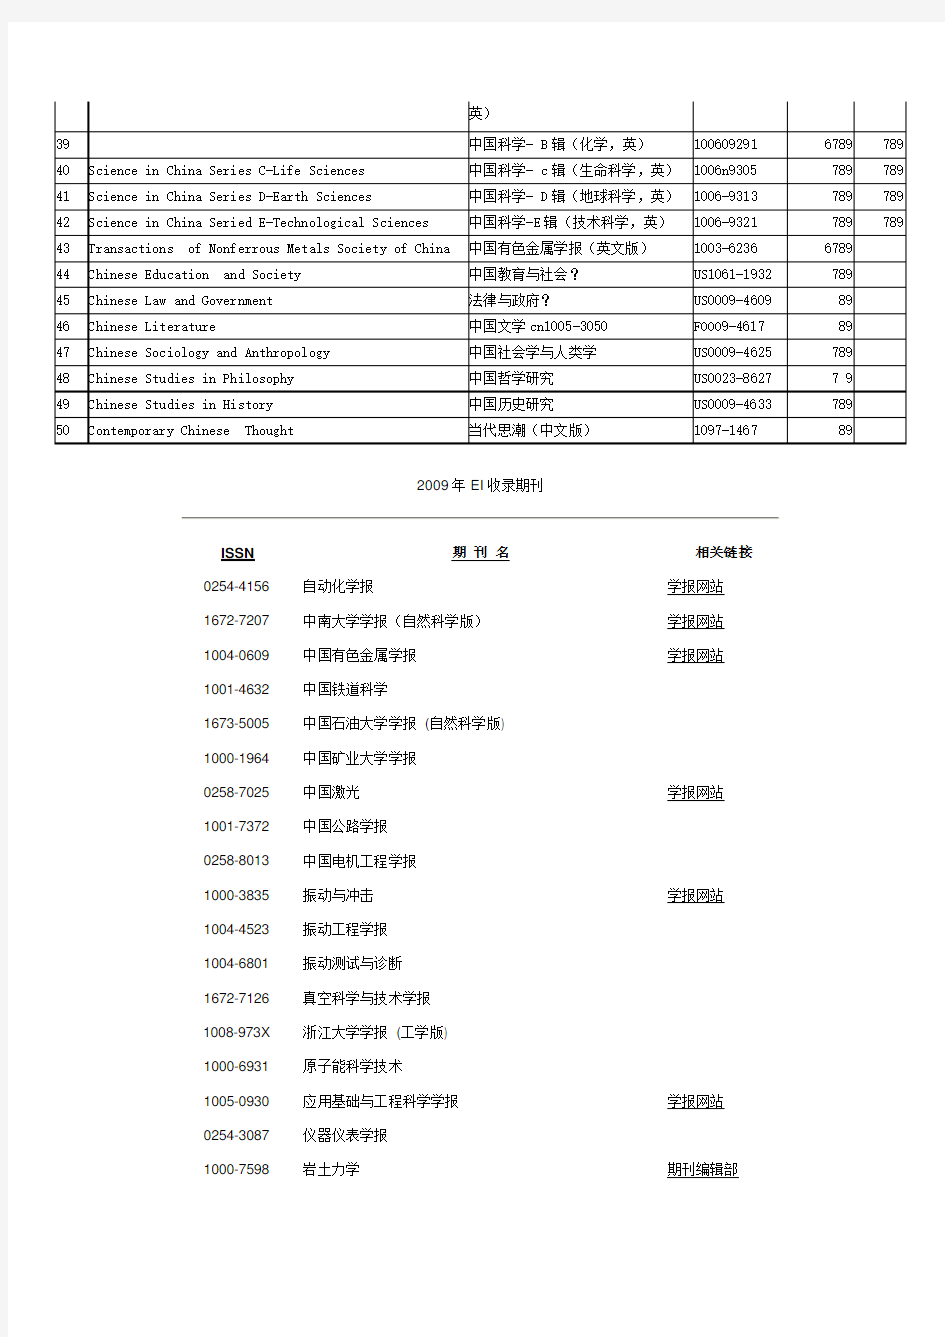 SCIEI收录中国期刊一览表